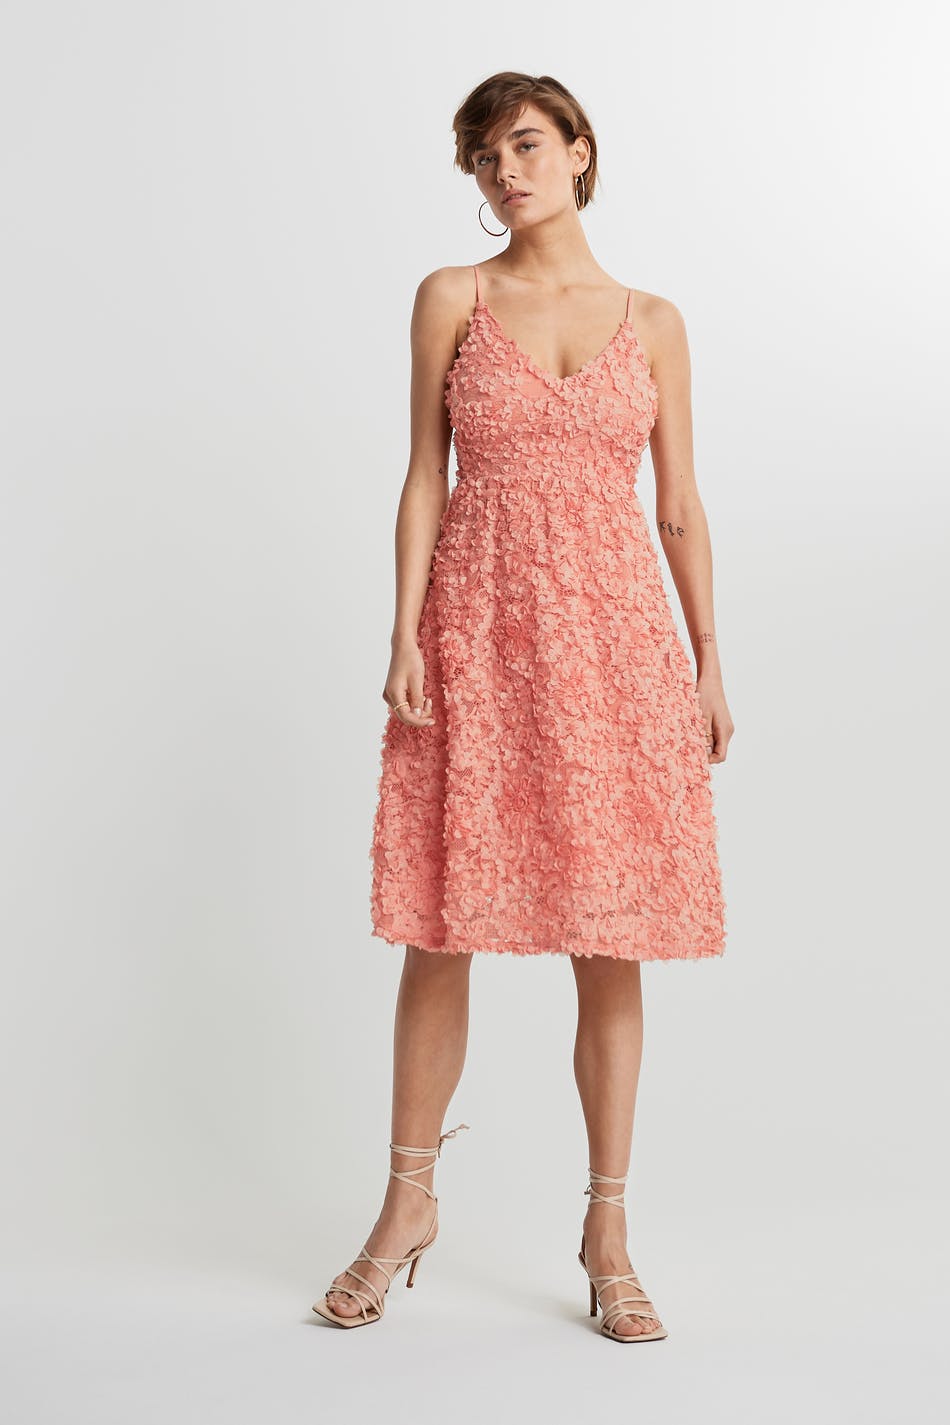 Blossom lace dress